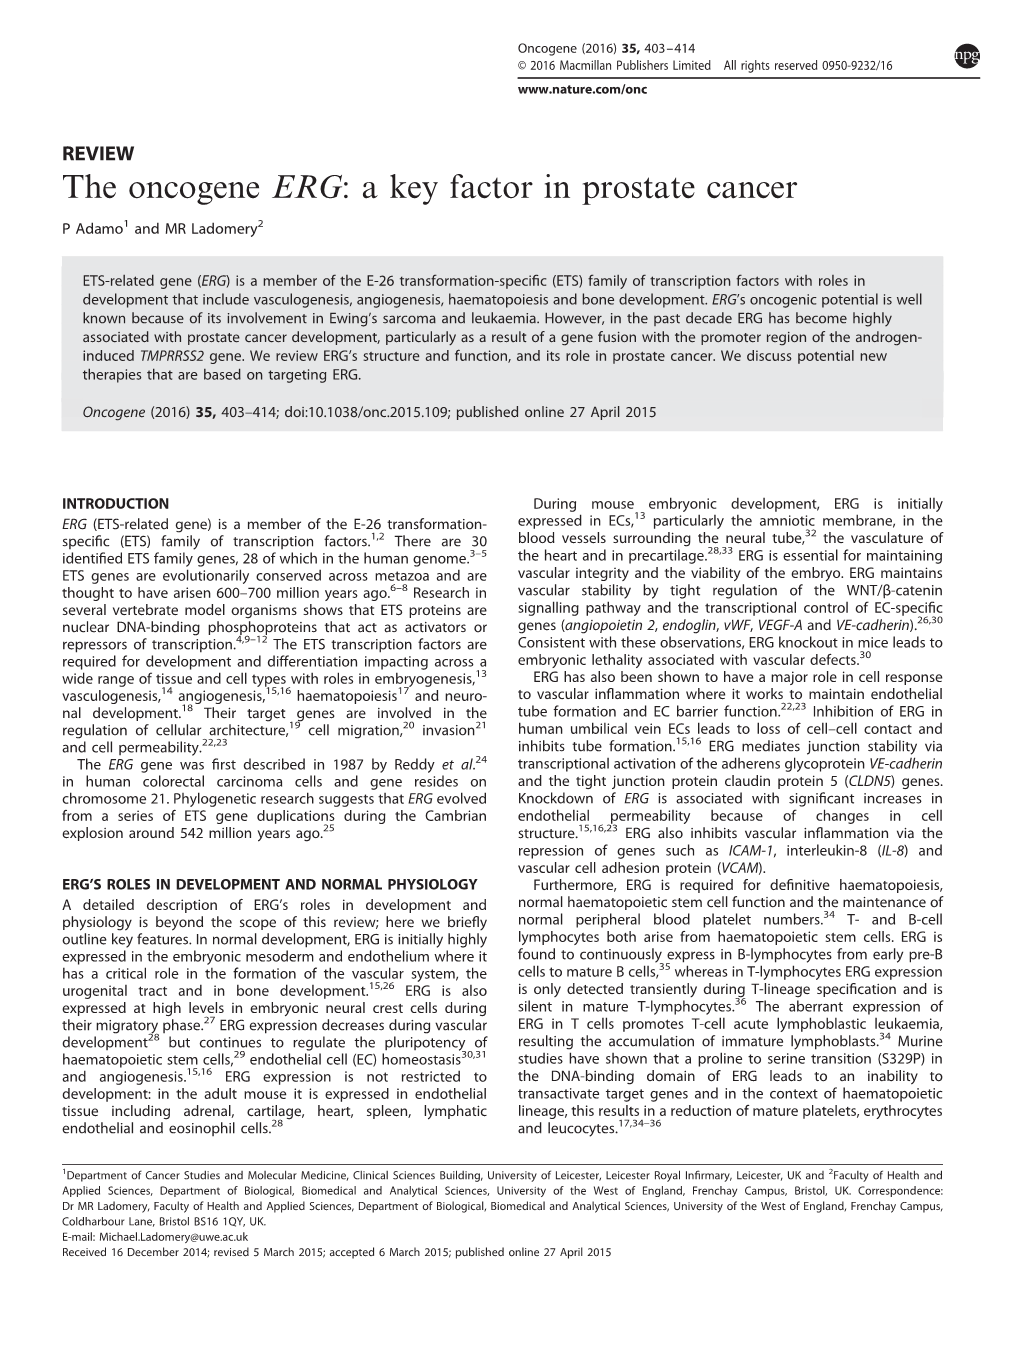 The Oncogene ERG: a Key Factor in Prostate Cancer